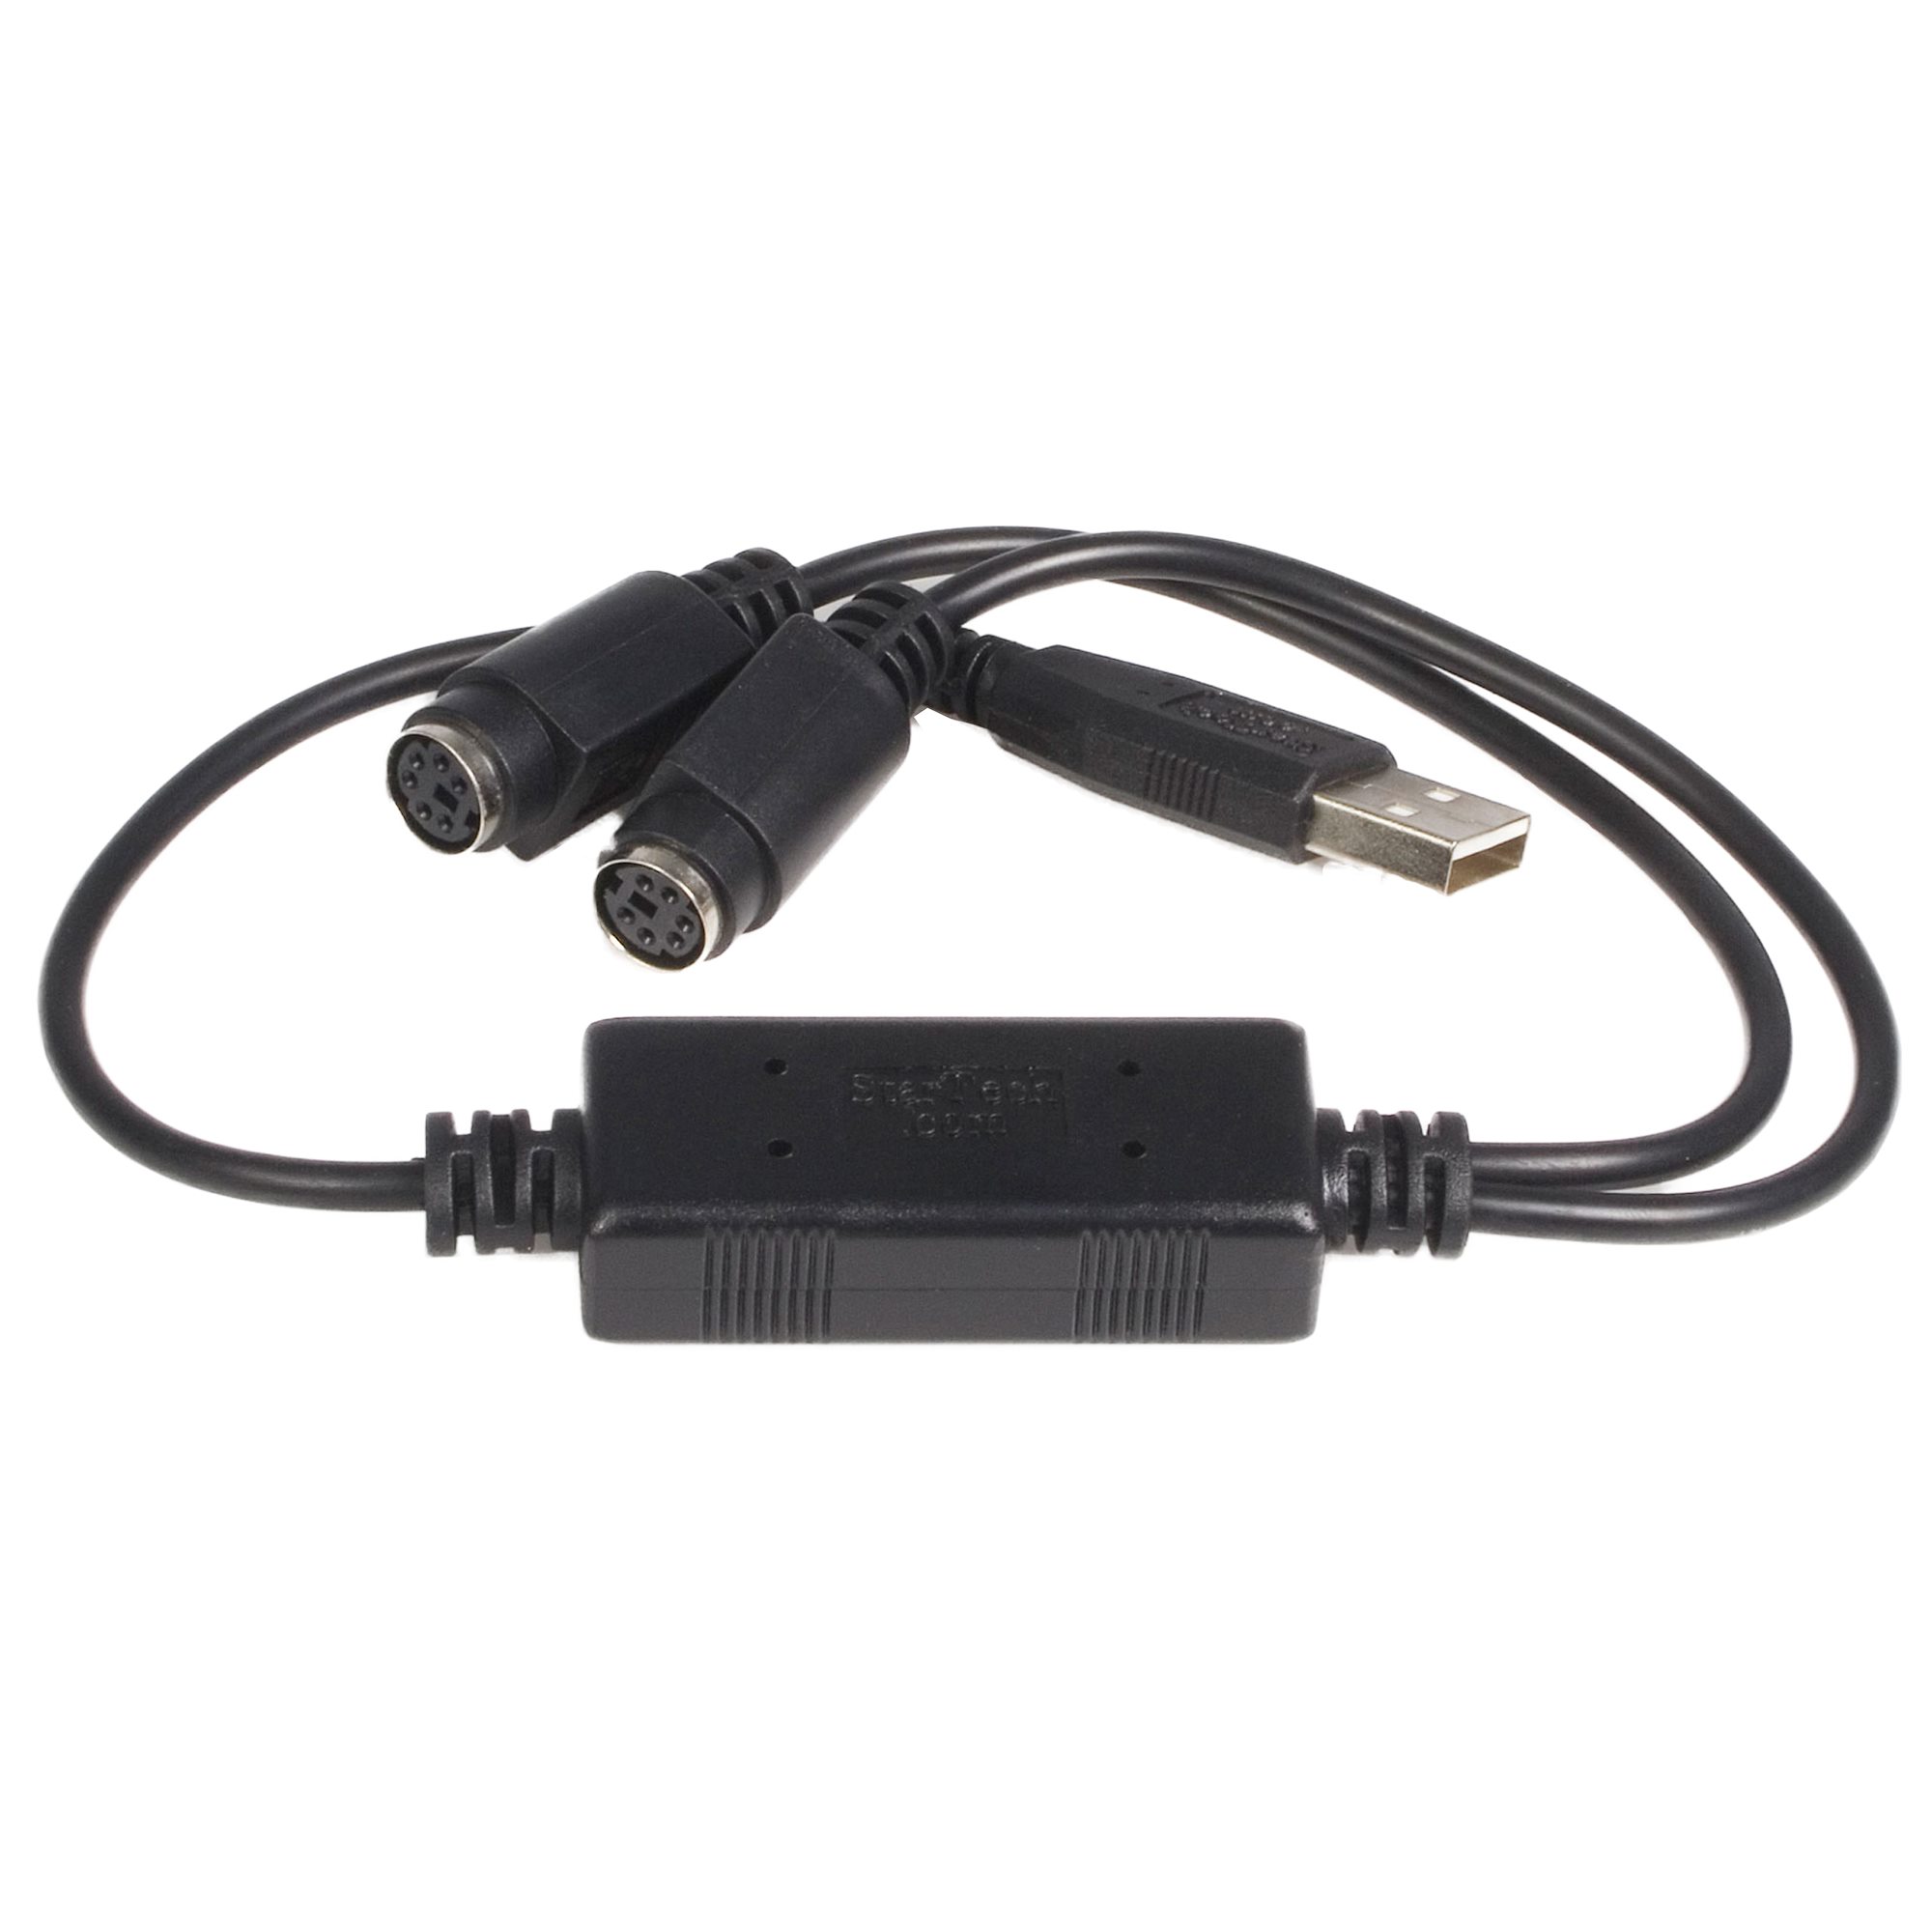 USB to Adapter - Keyboard and Mouse - Adaptadores USB (USB 2.0) | España